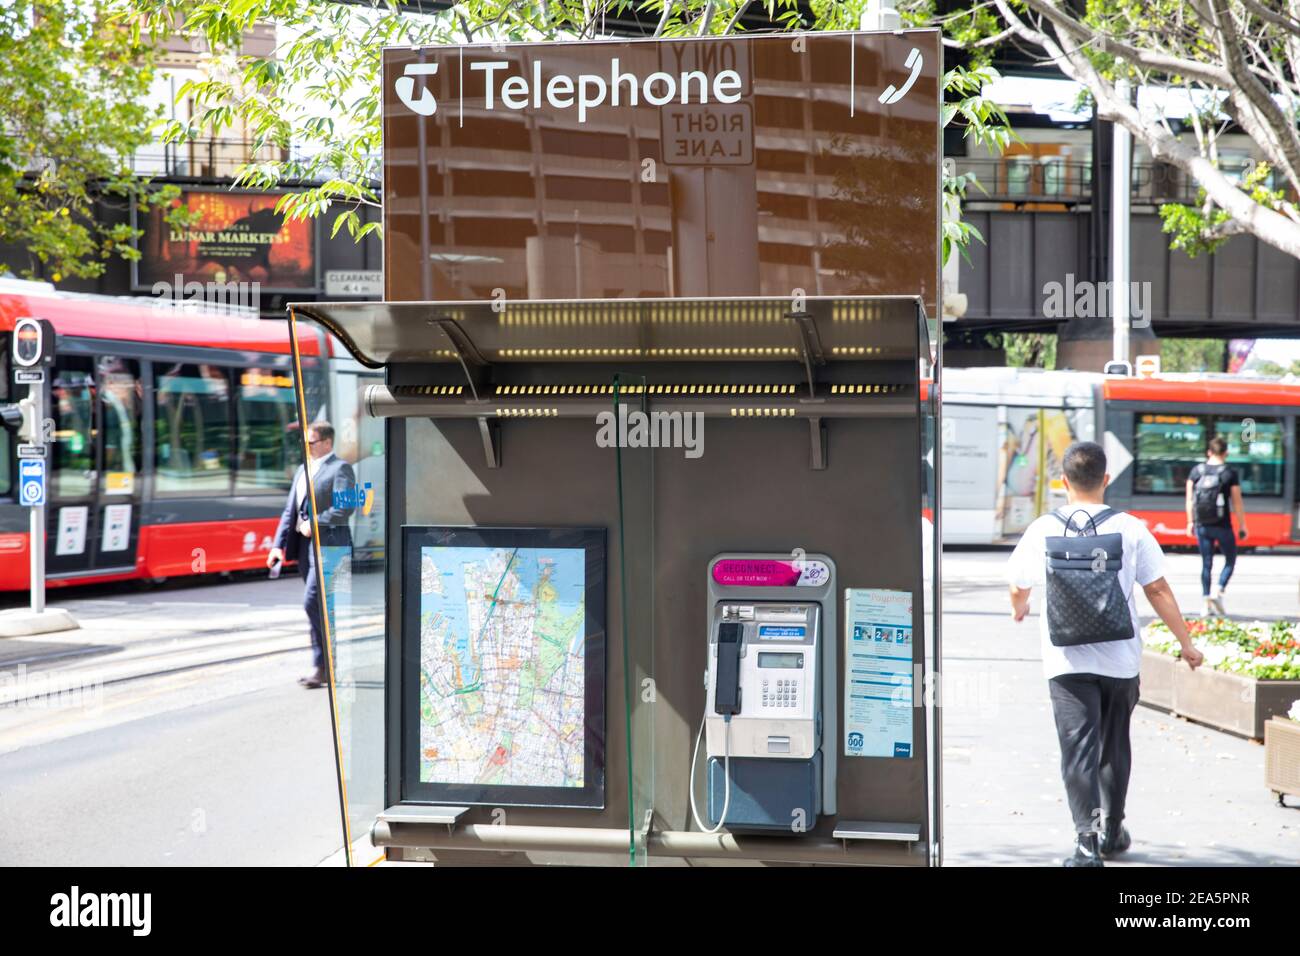 Traditional Telstra public phone booth payphone using landline technology,Sydney city centre,NSW,Australia Stock Photo